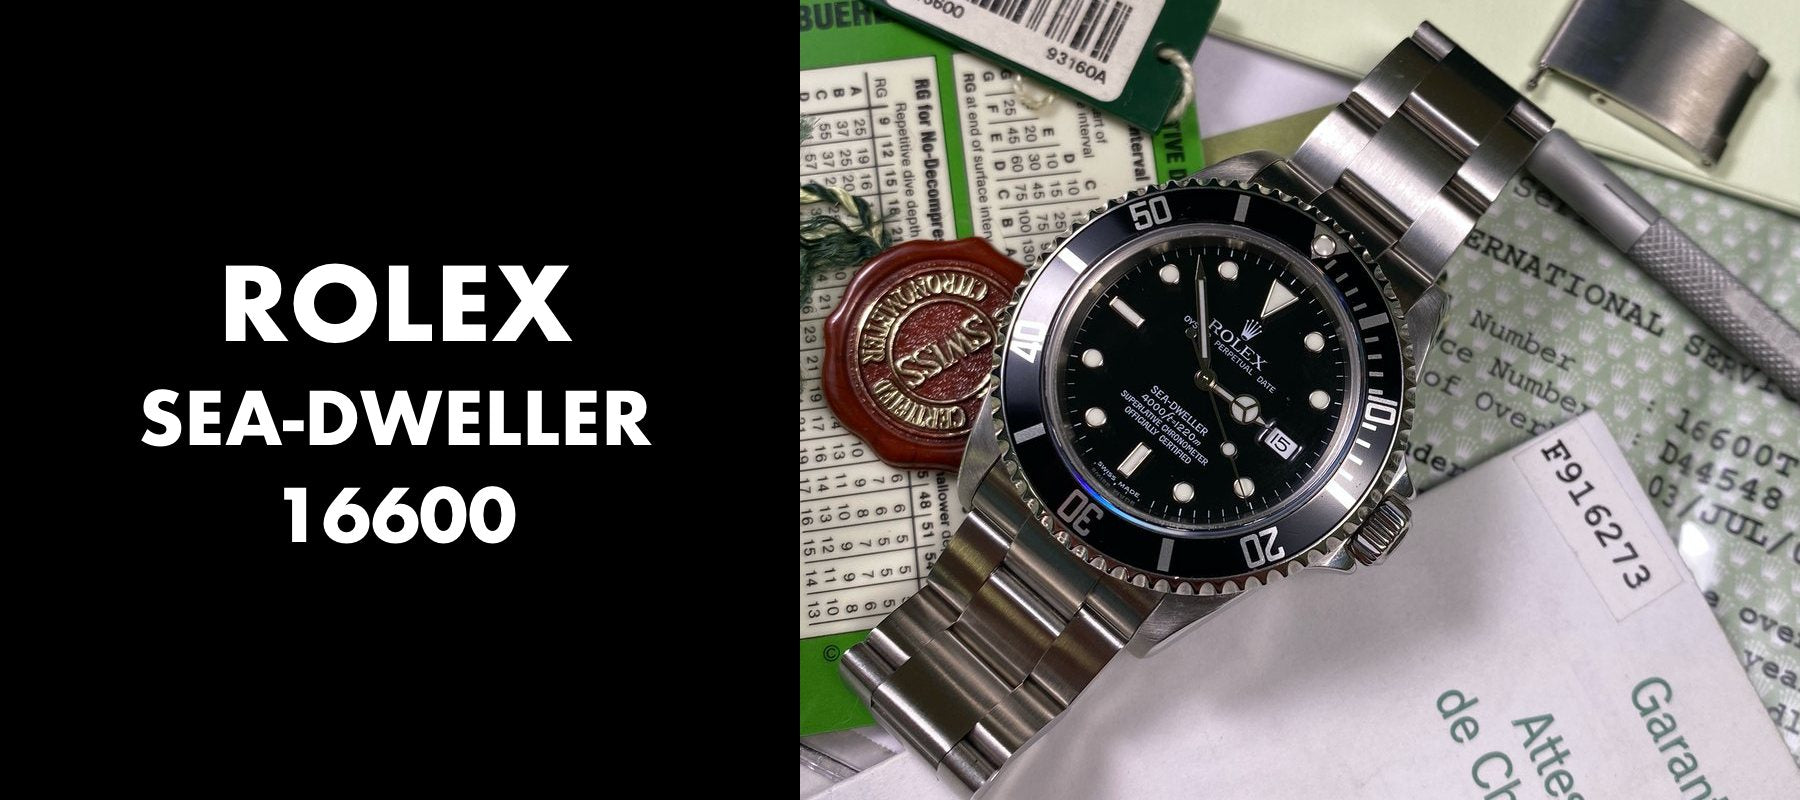 Rolex Sea-Dweller 16600 - History